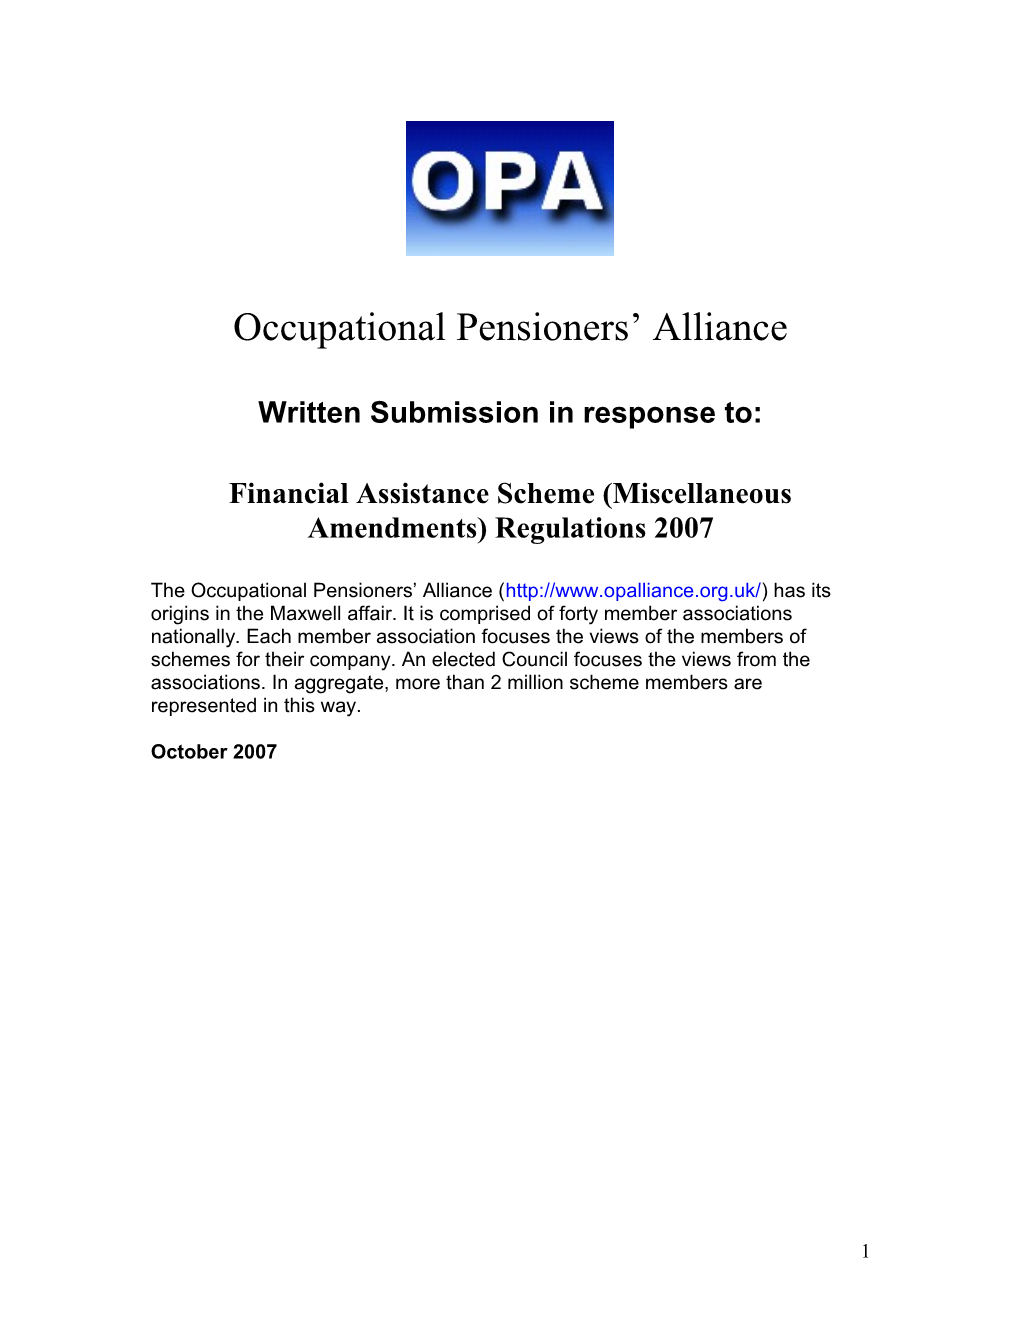 Financial Assistance Scheme (Miscellaneous Amendments) Regulations 2007